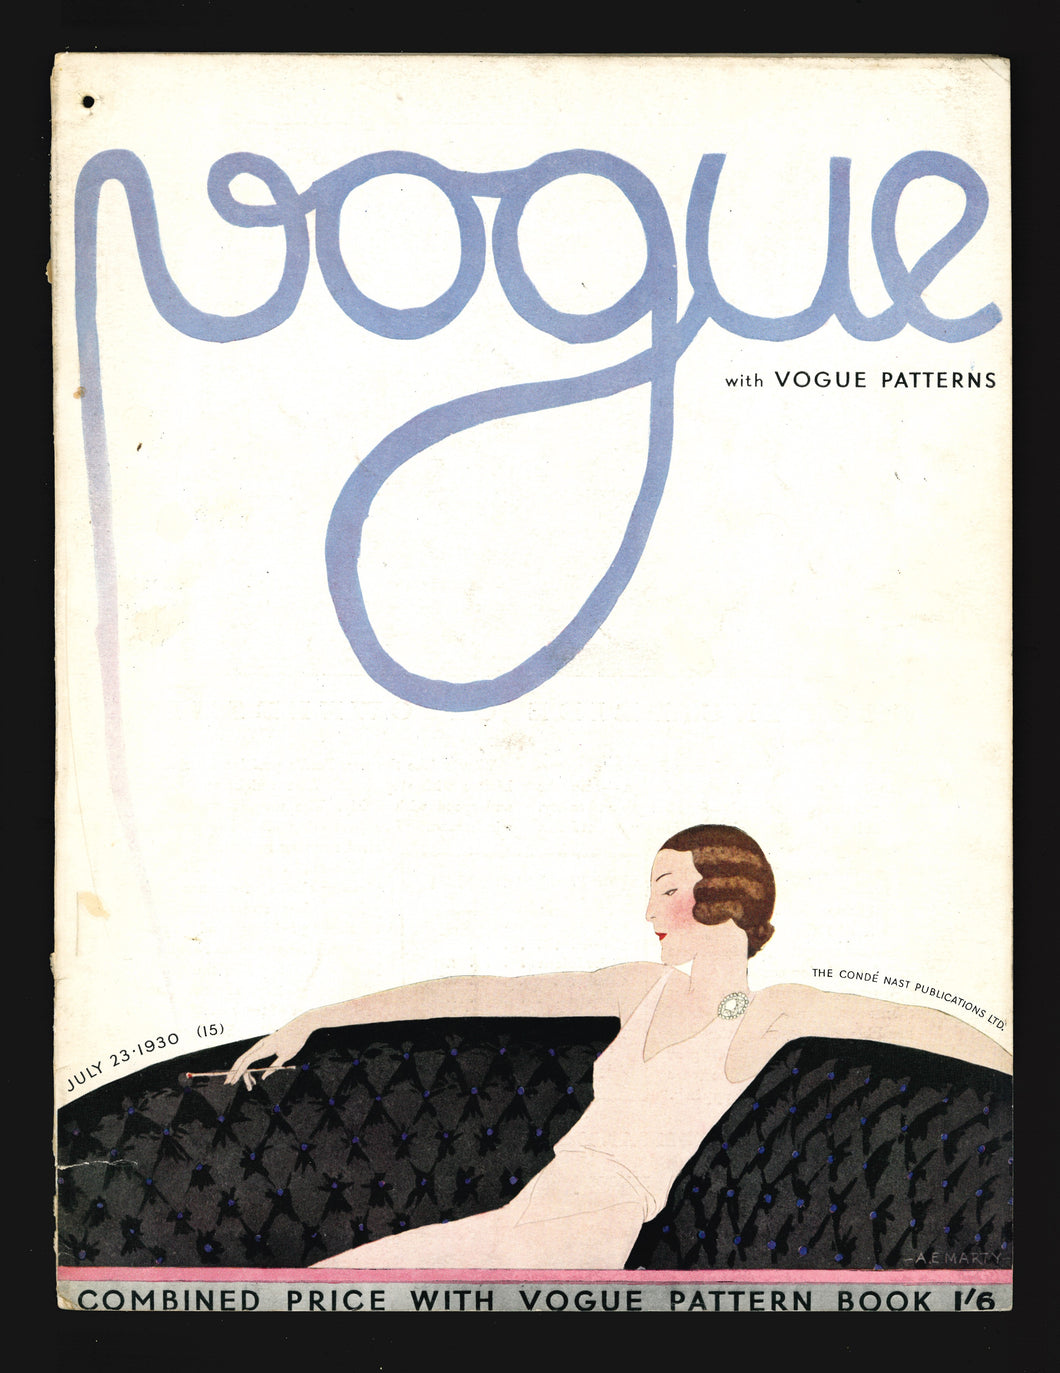 Vogue UK July 23 1930